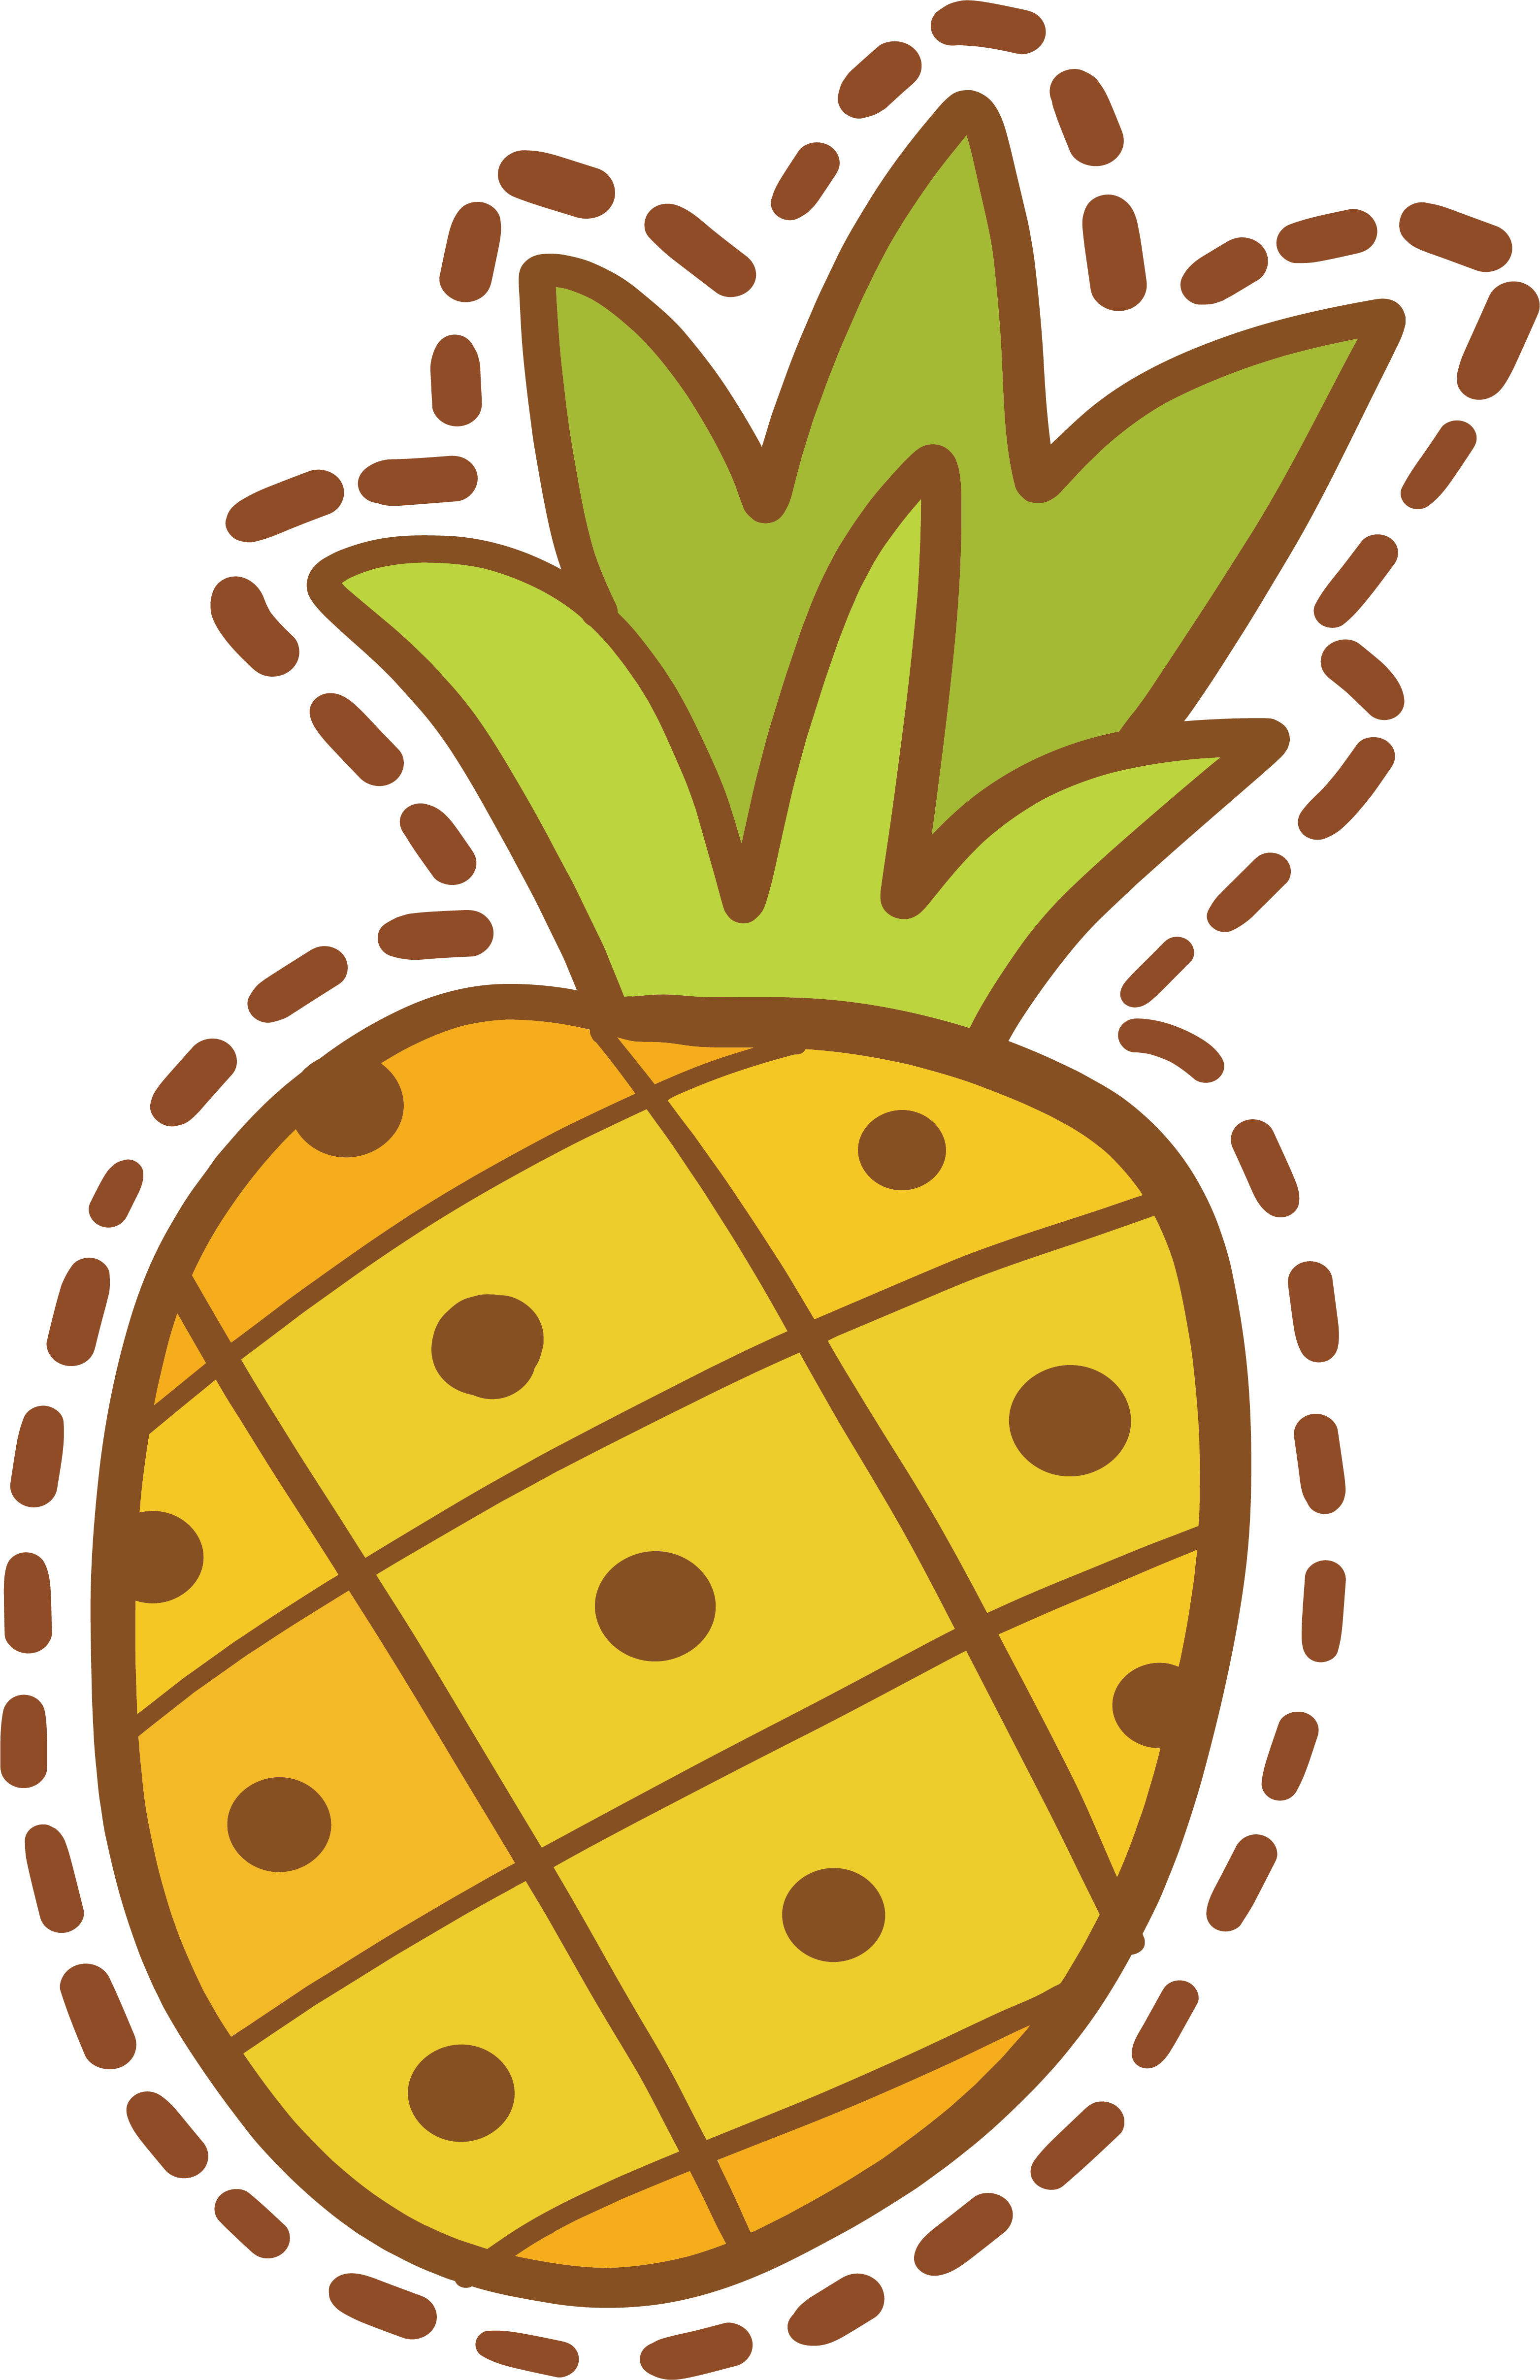 Pineapple Sticker Design - Sticker De Piña (3127x4833)